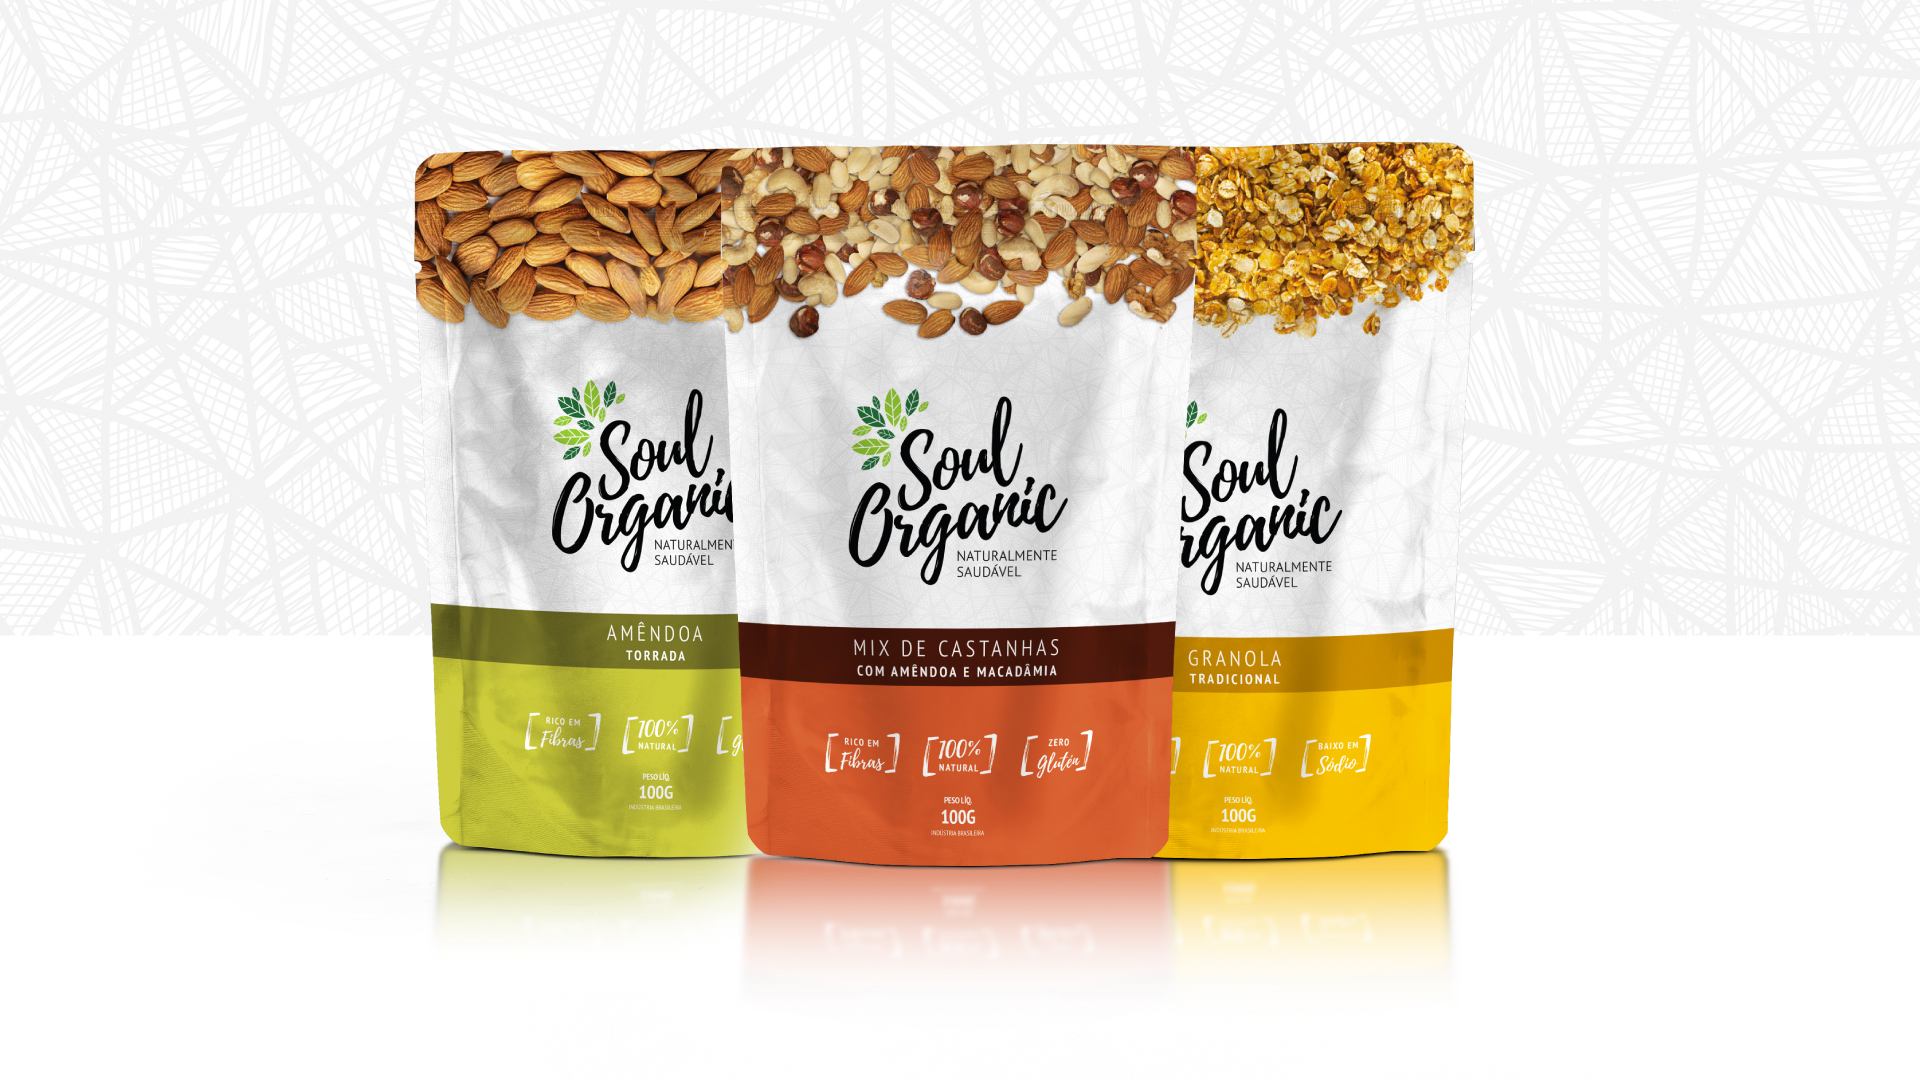 Soul Organic Packaging Design